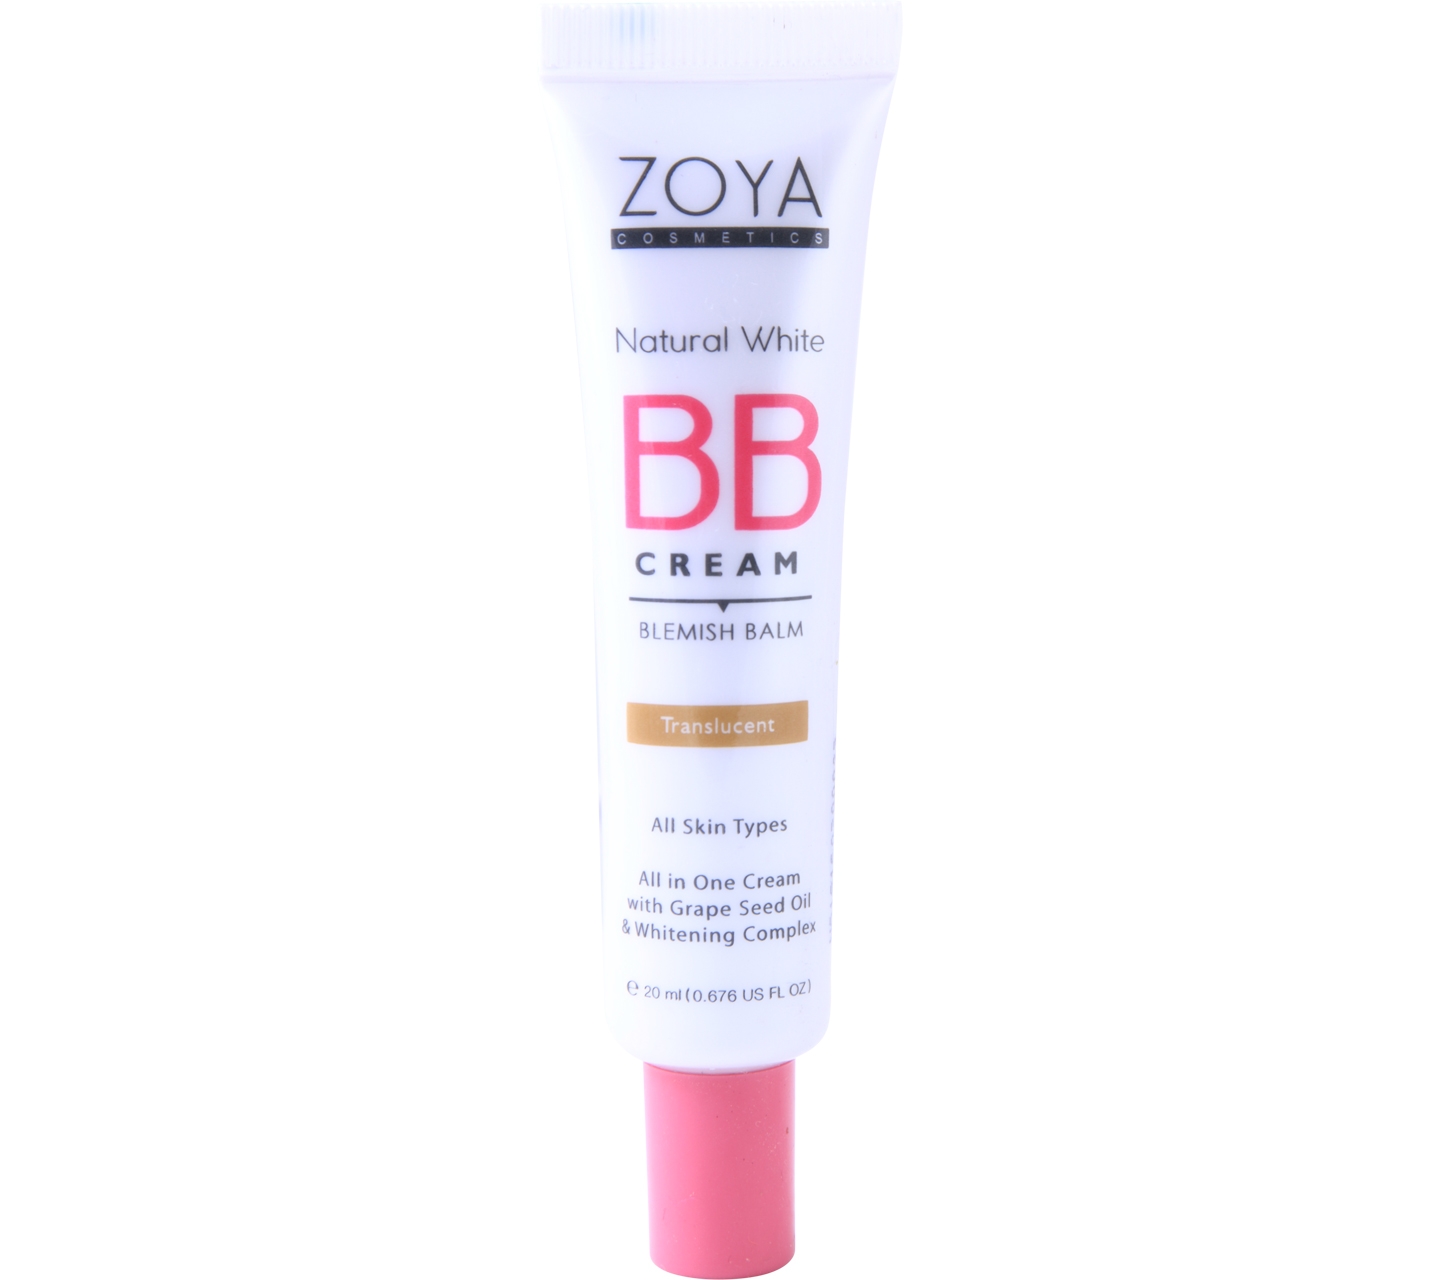 ZOYA Natural White BB Cream Blemish Balm Faces